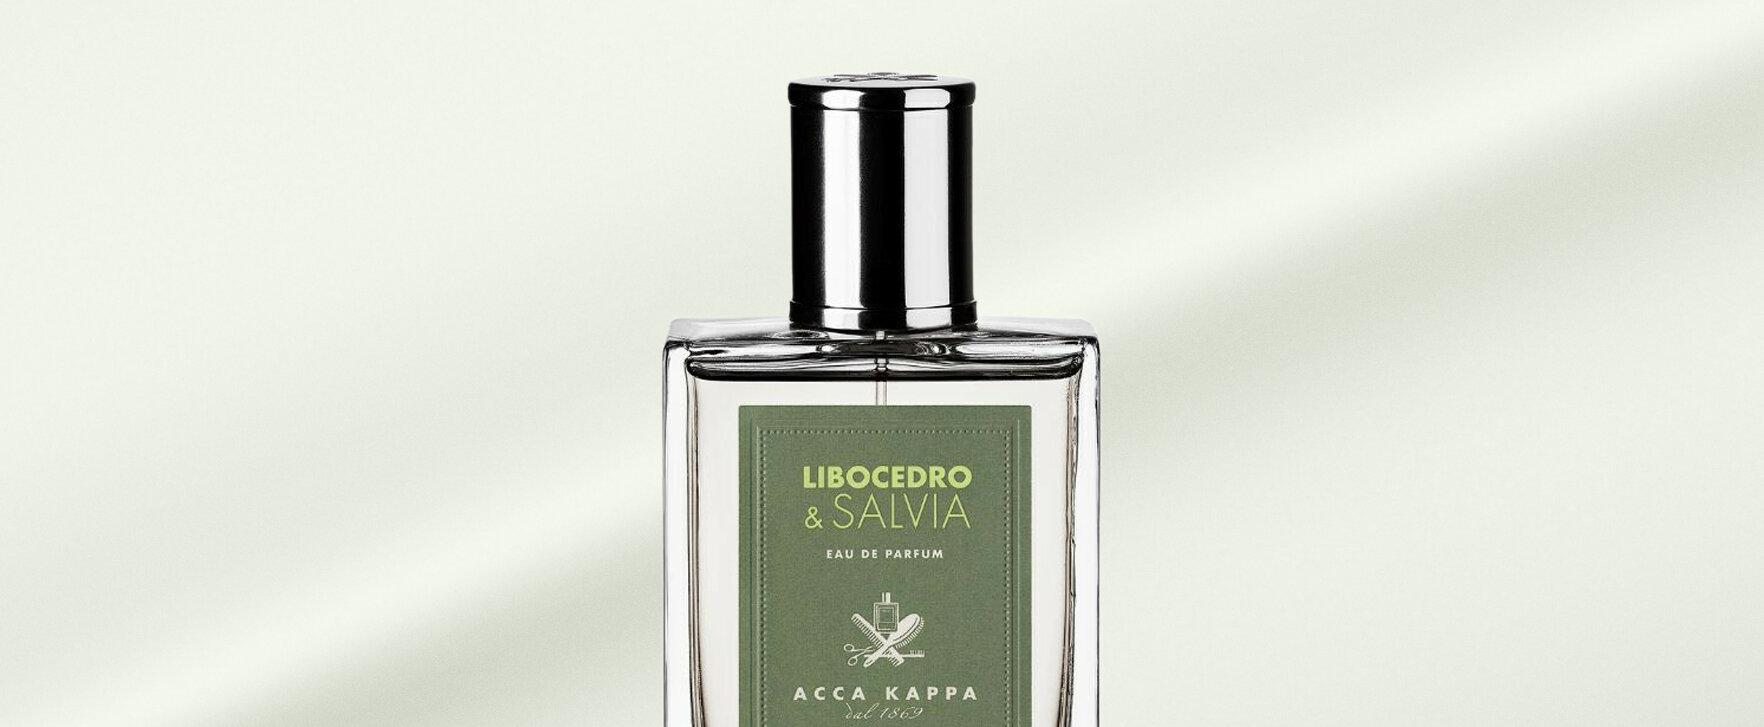 Acca Kappa stellt den neuen holzig-grünen Unisexduft „Libocedro & Salvia“ vor